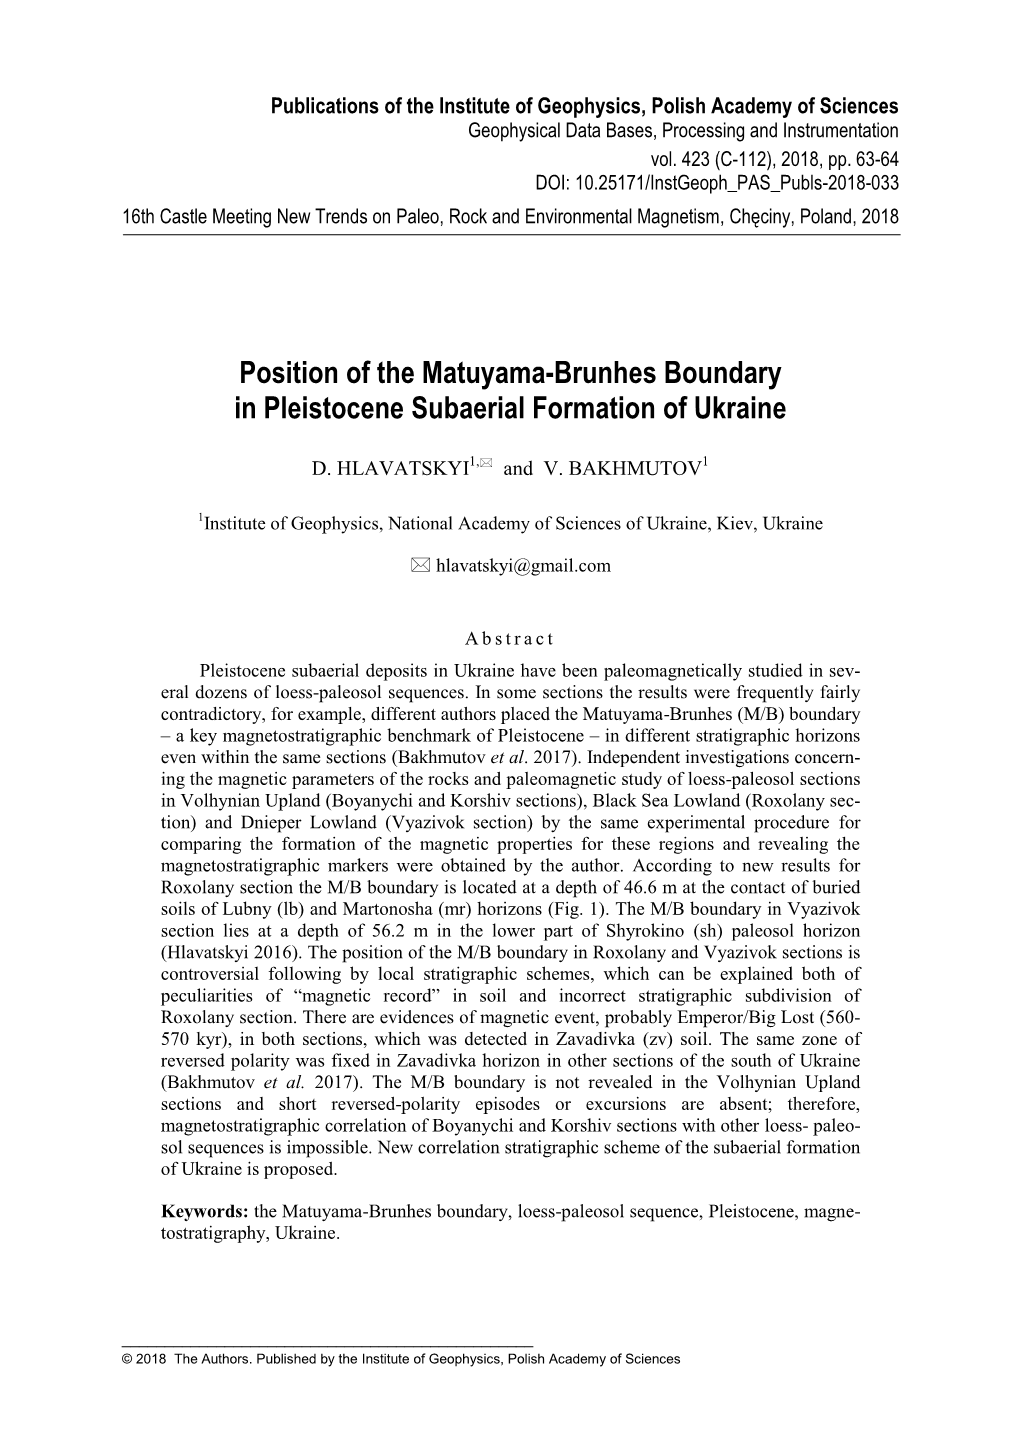 Position of the Matuyama-Brunhes Boundary in Pleistocene Subaerial Formation of Ukraine